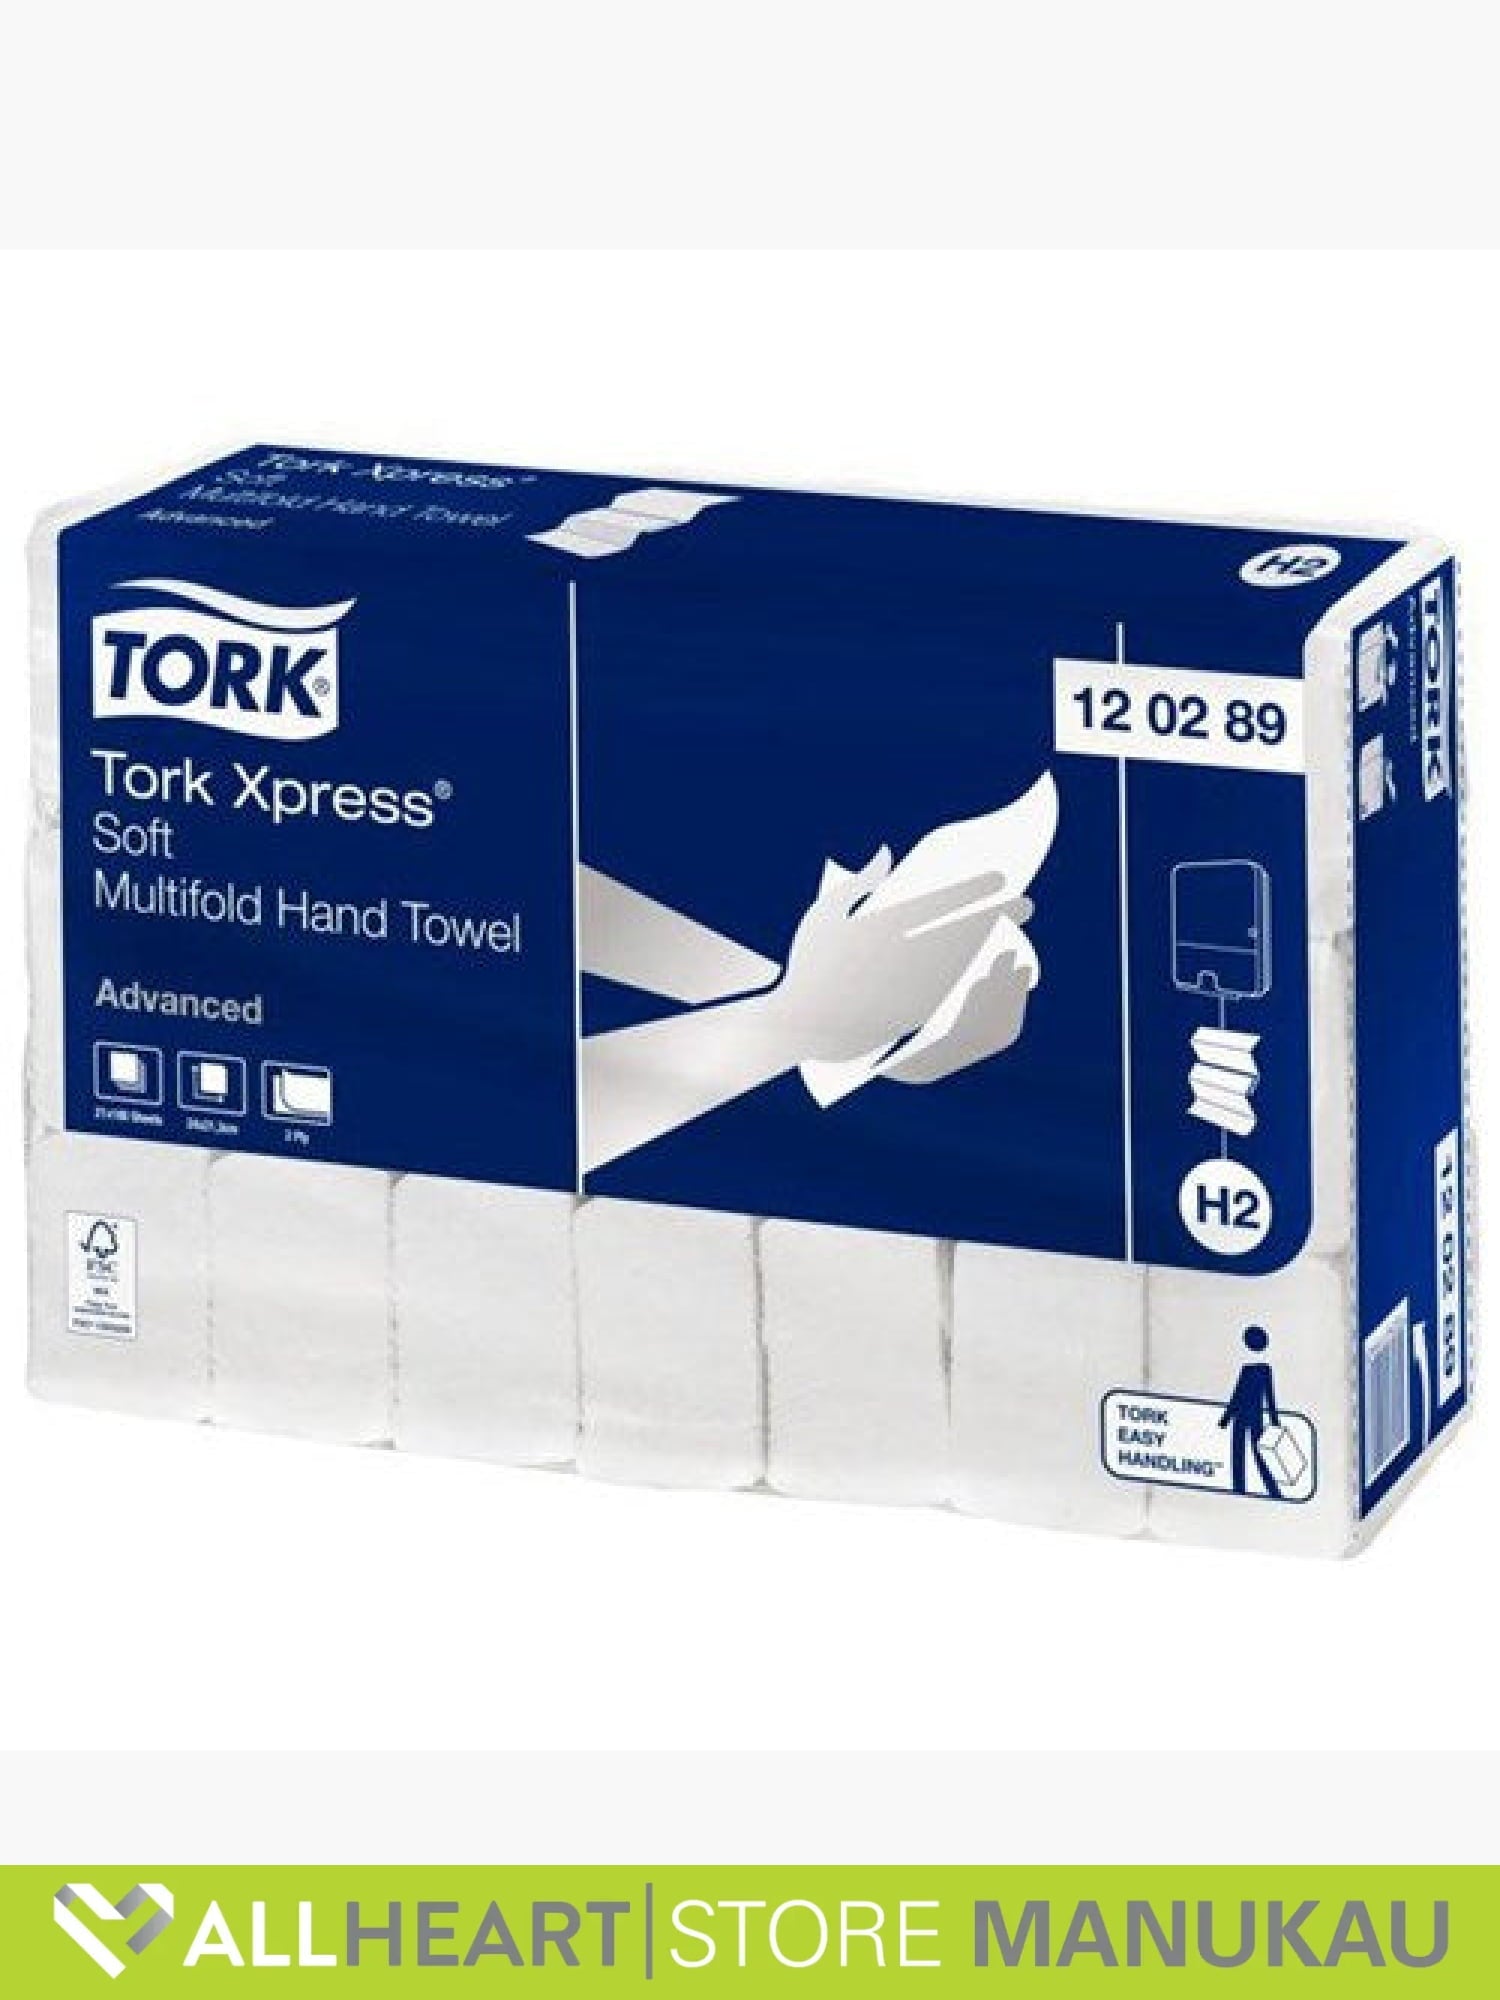 Tork Xpress - Soft Hand Towel - H2 12 02 89